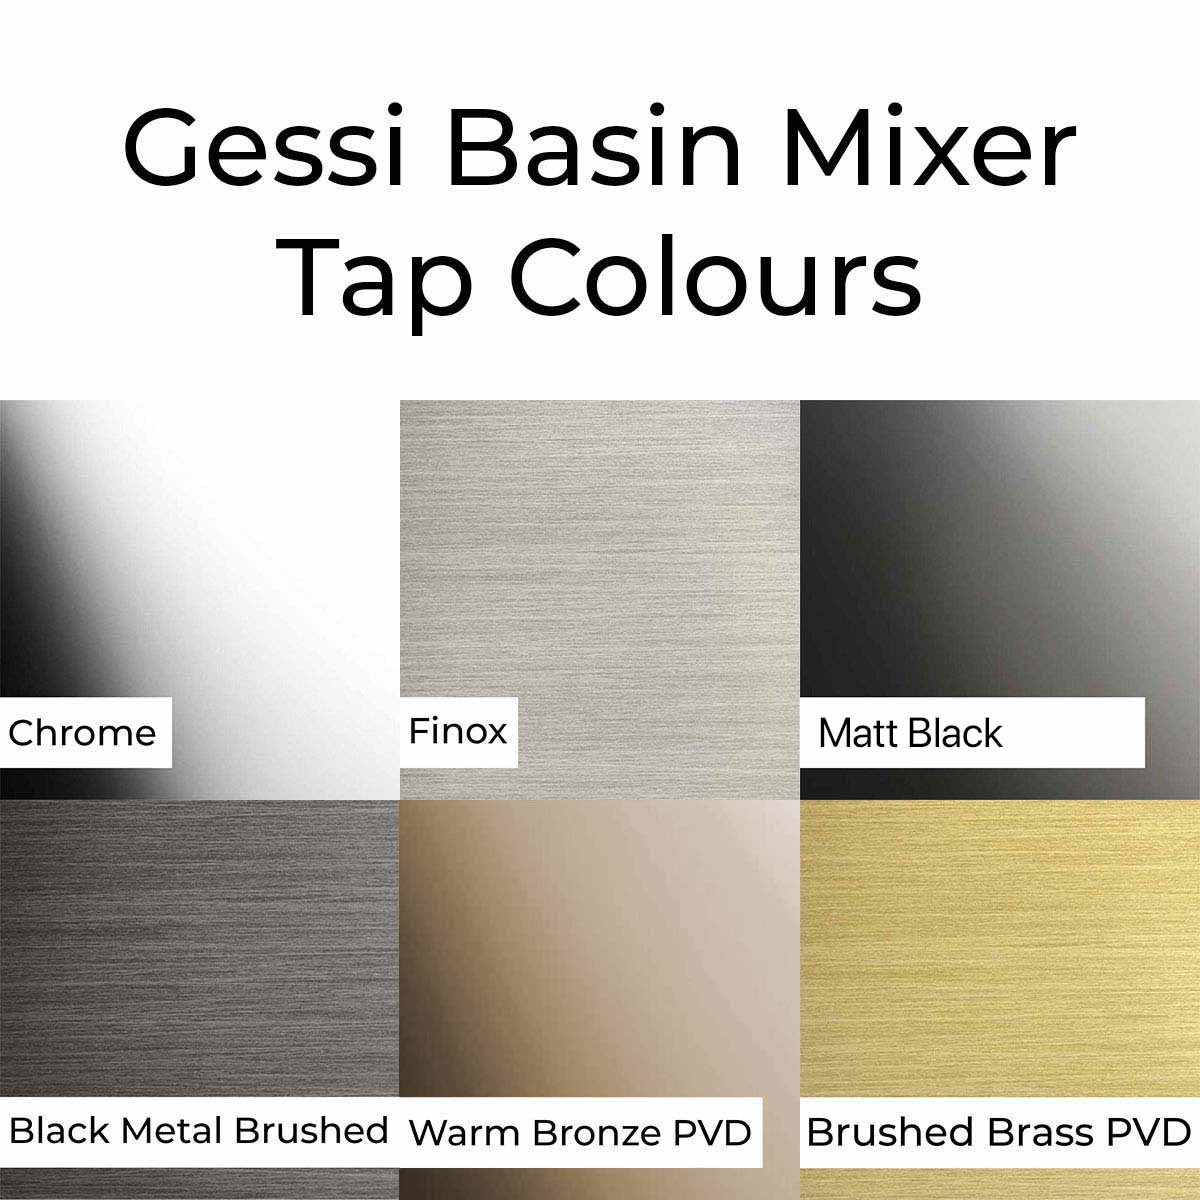 Gessi Via Manzoni High Version Basin Mixer Colours